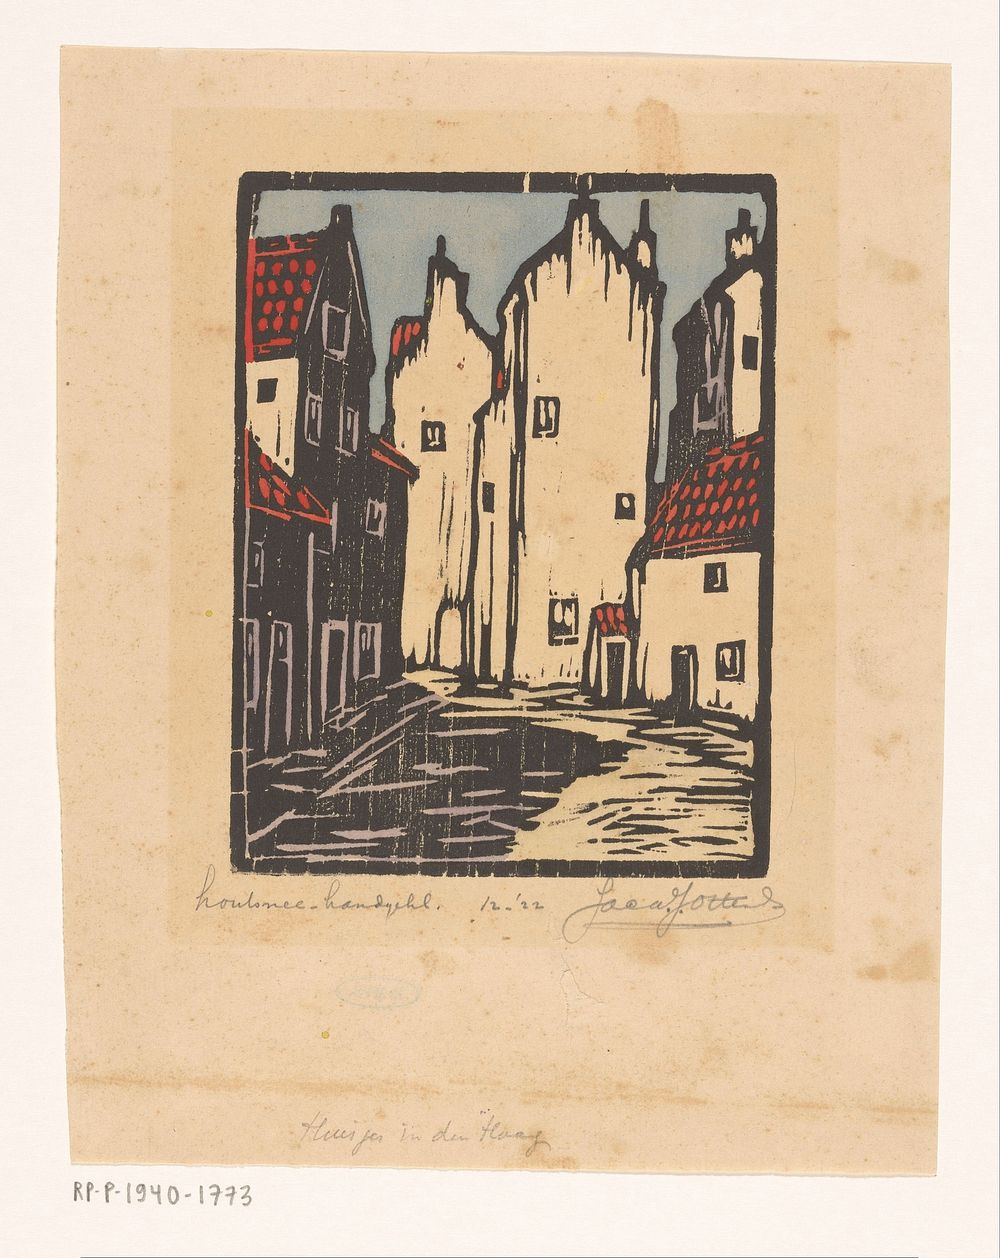 Huisjes in Den Haag (1922) by Jacques Jeichienus Ottens